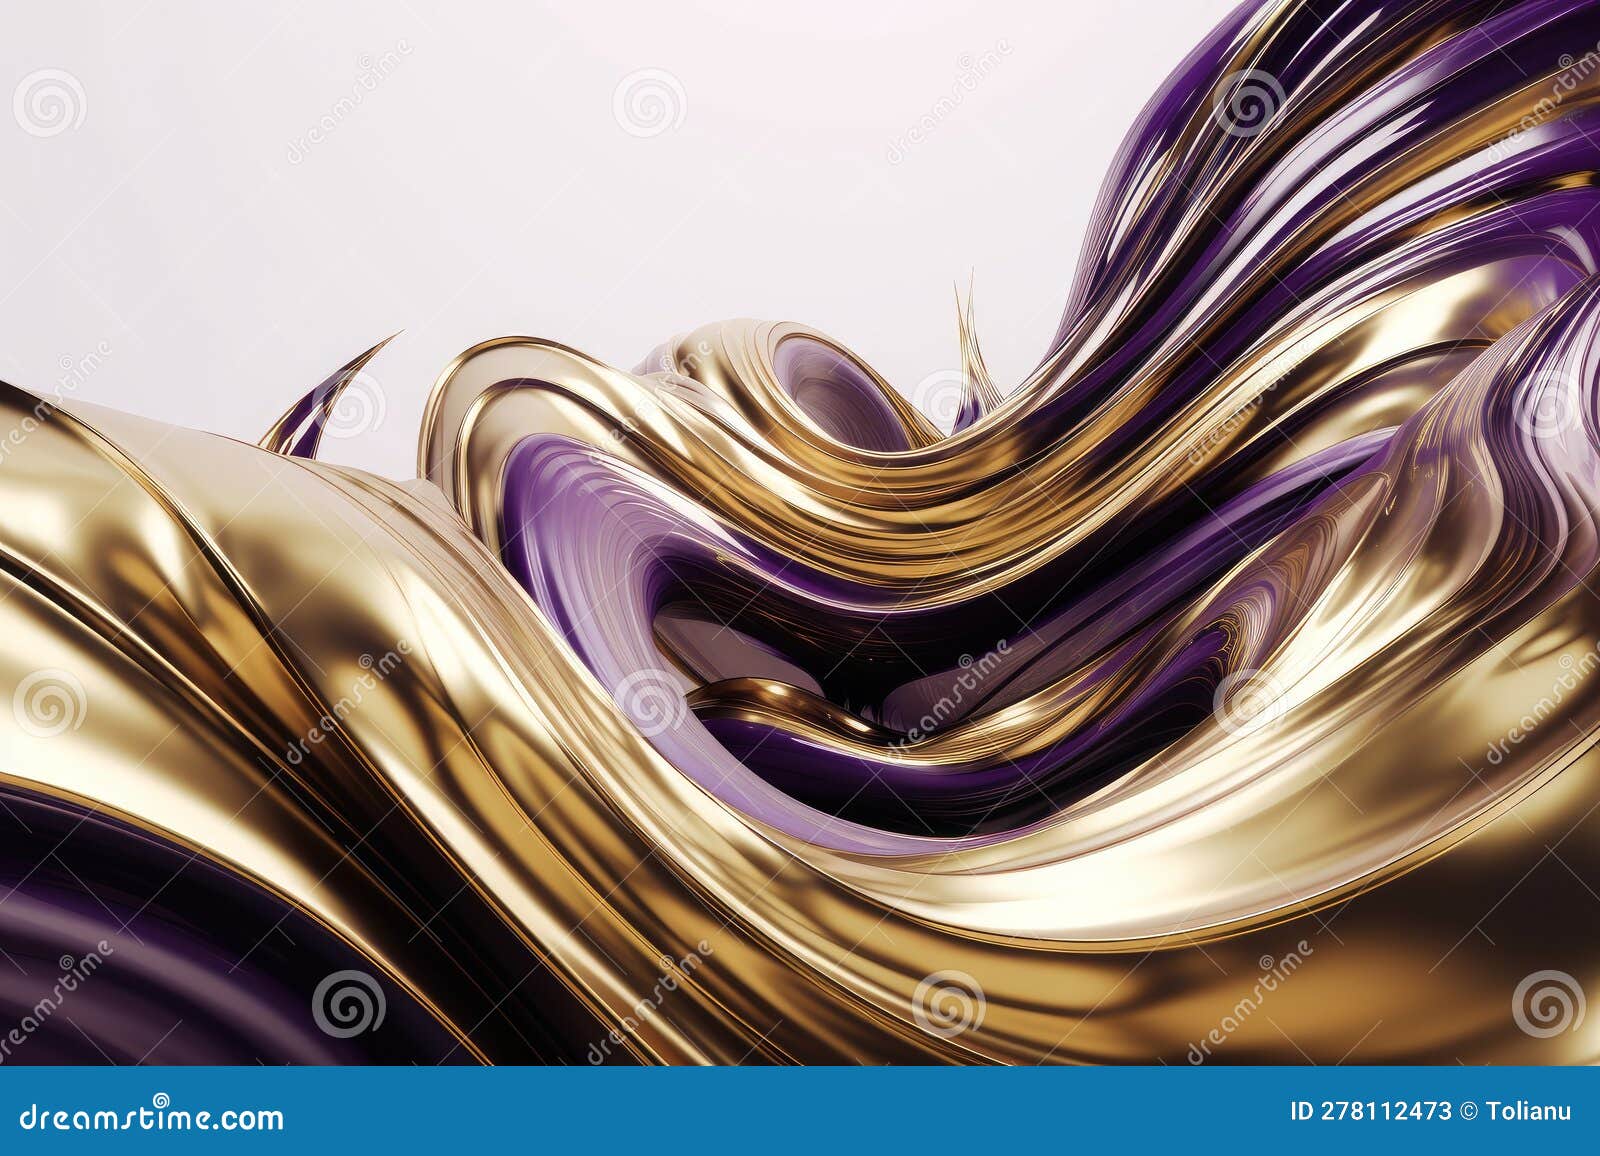 golden waves and purple twists: a minimalist industrial desig